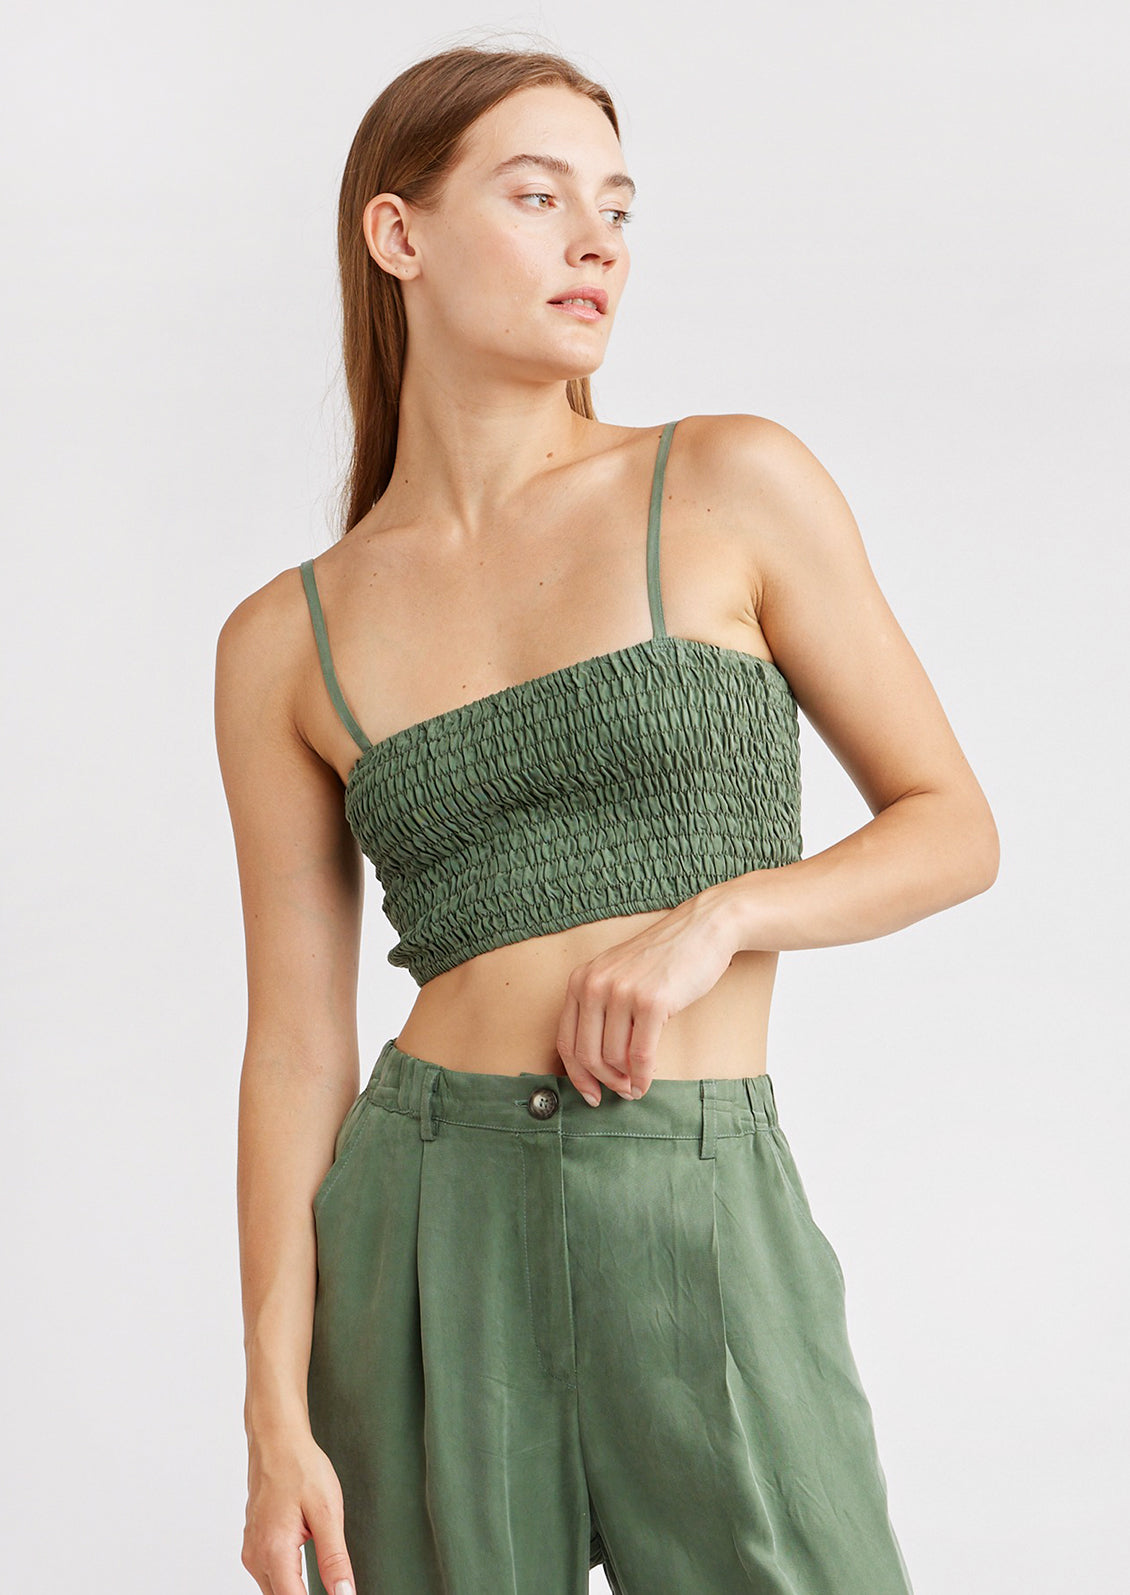 A woman wearing a smocked green spaghetti strap crop top.